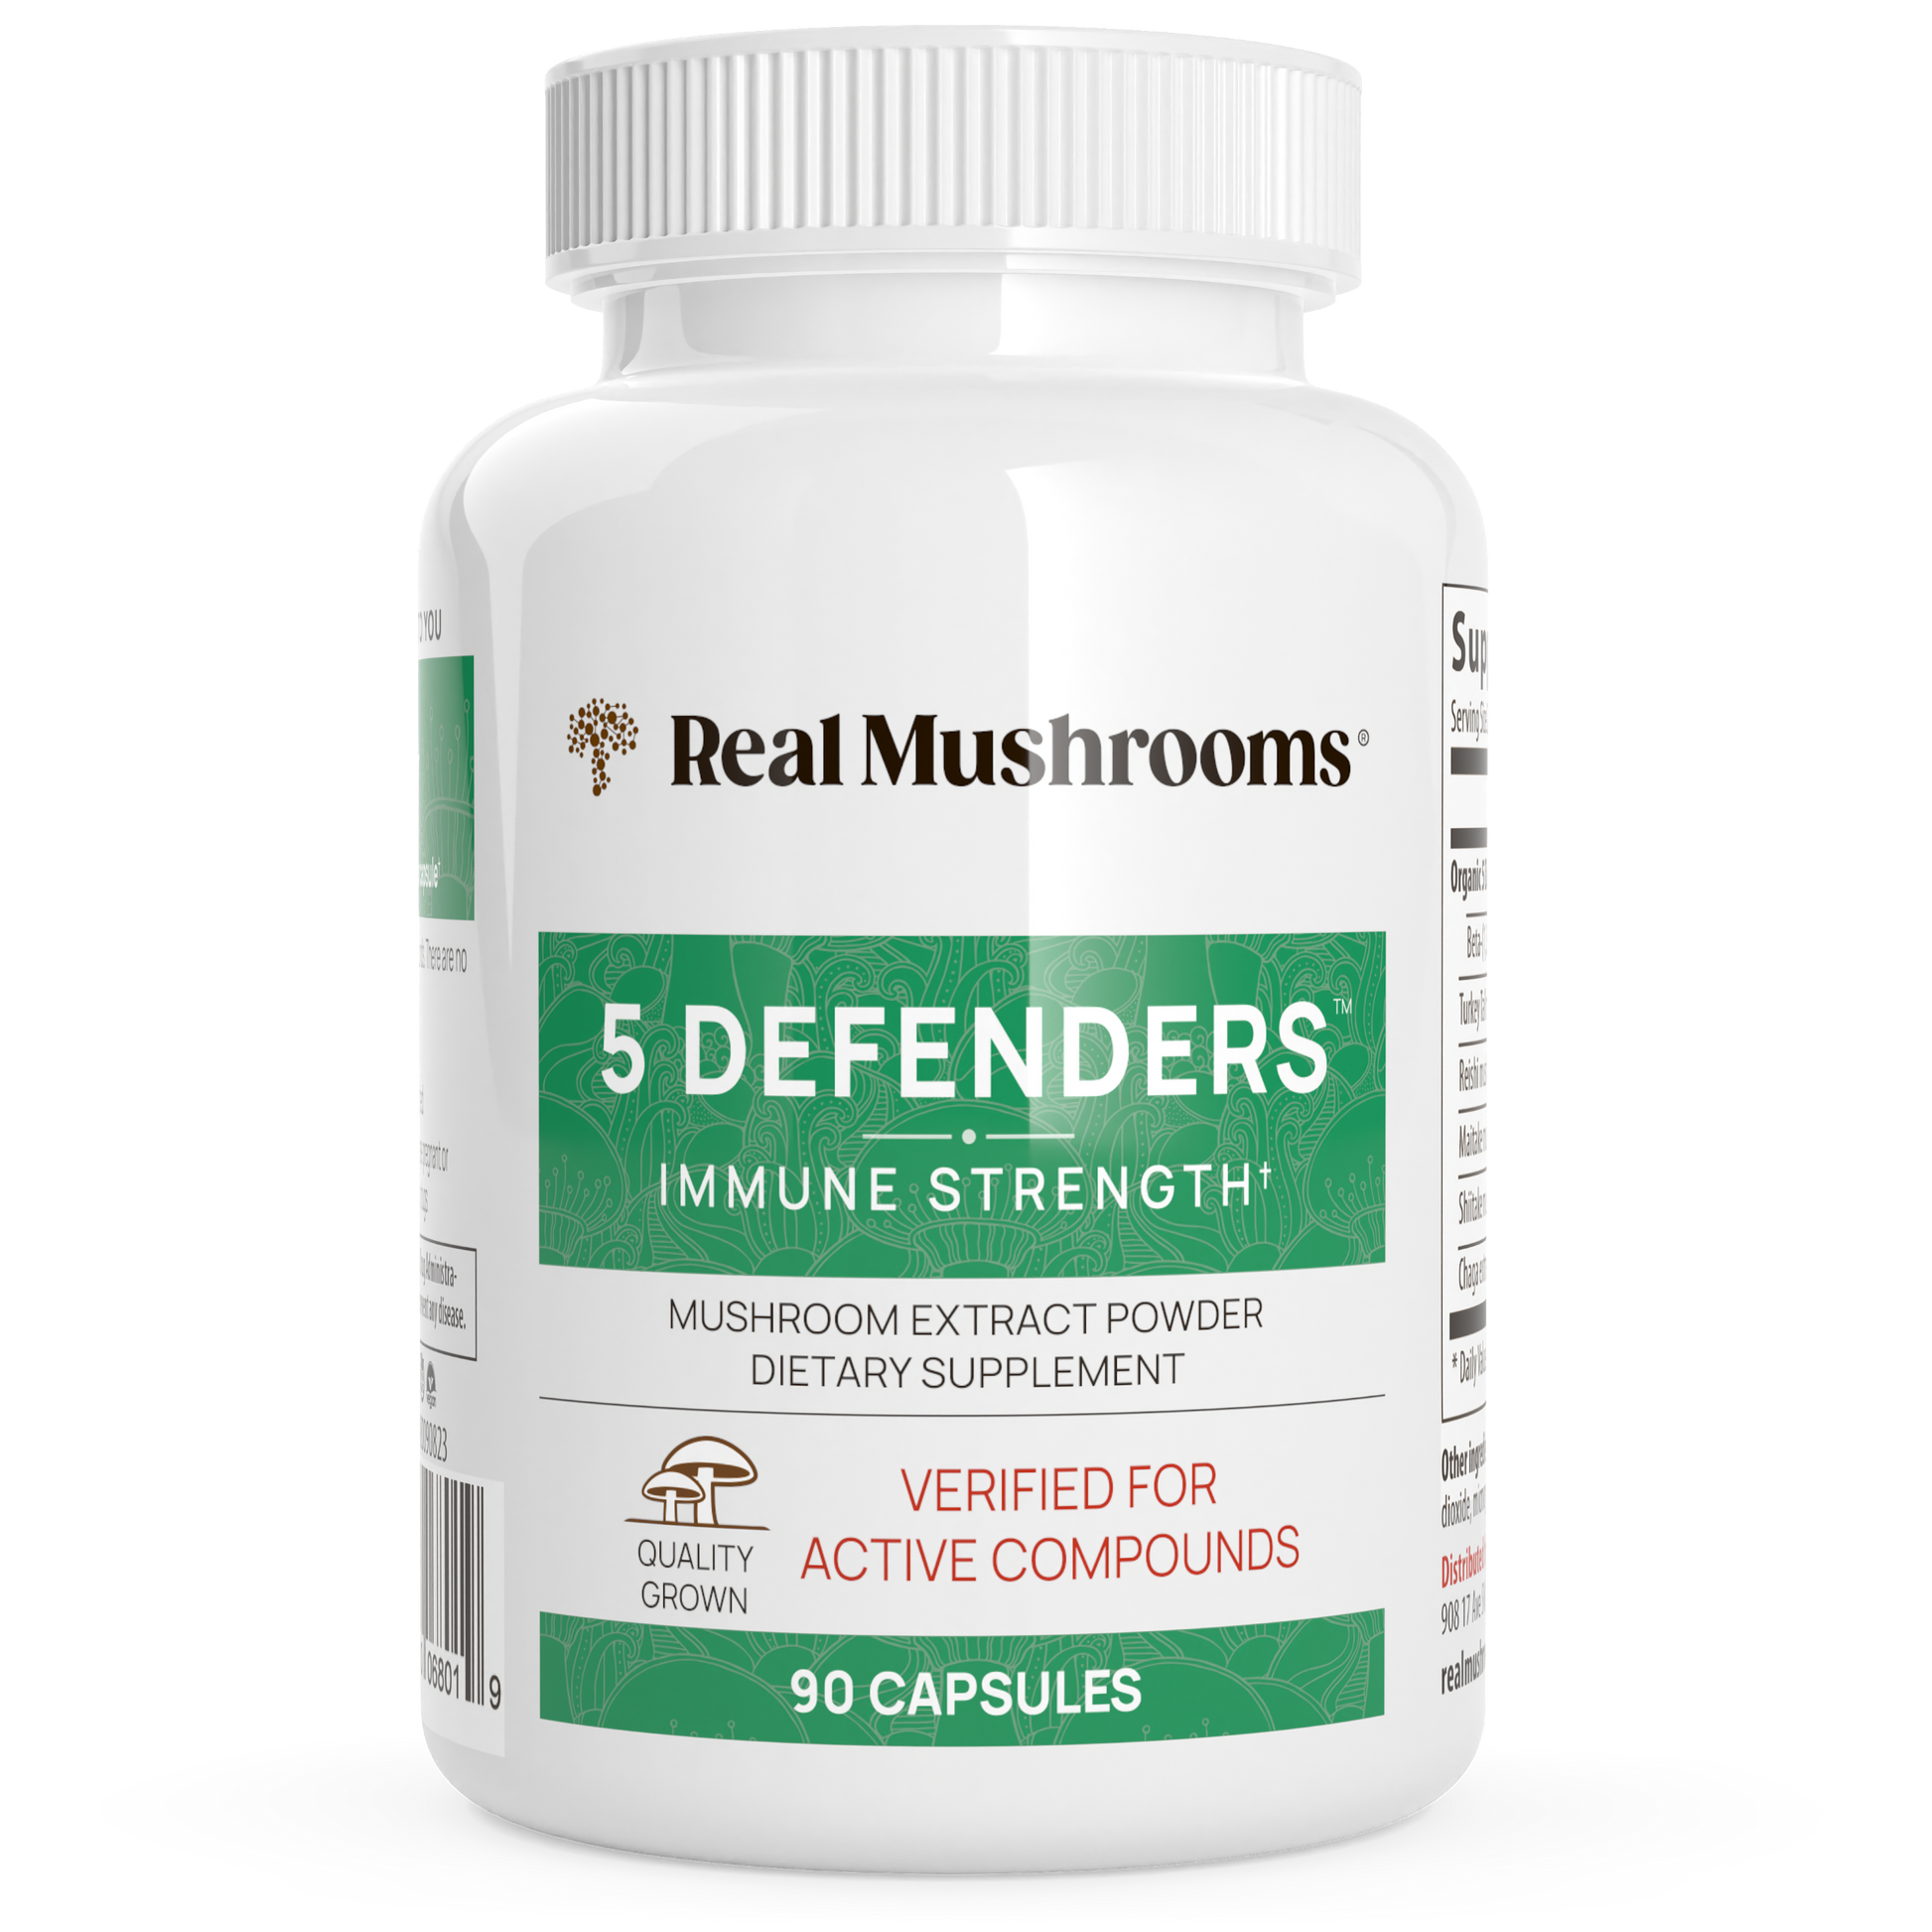 Real Mushrooms 5 Defenders Organic Mushroom Blend Capsules.